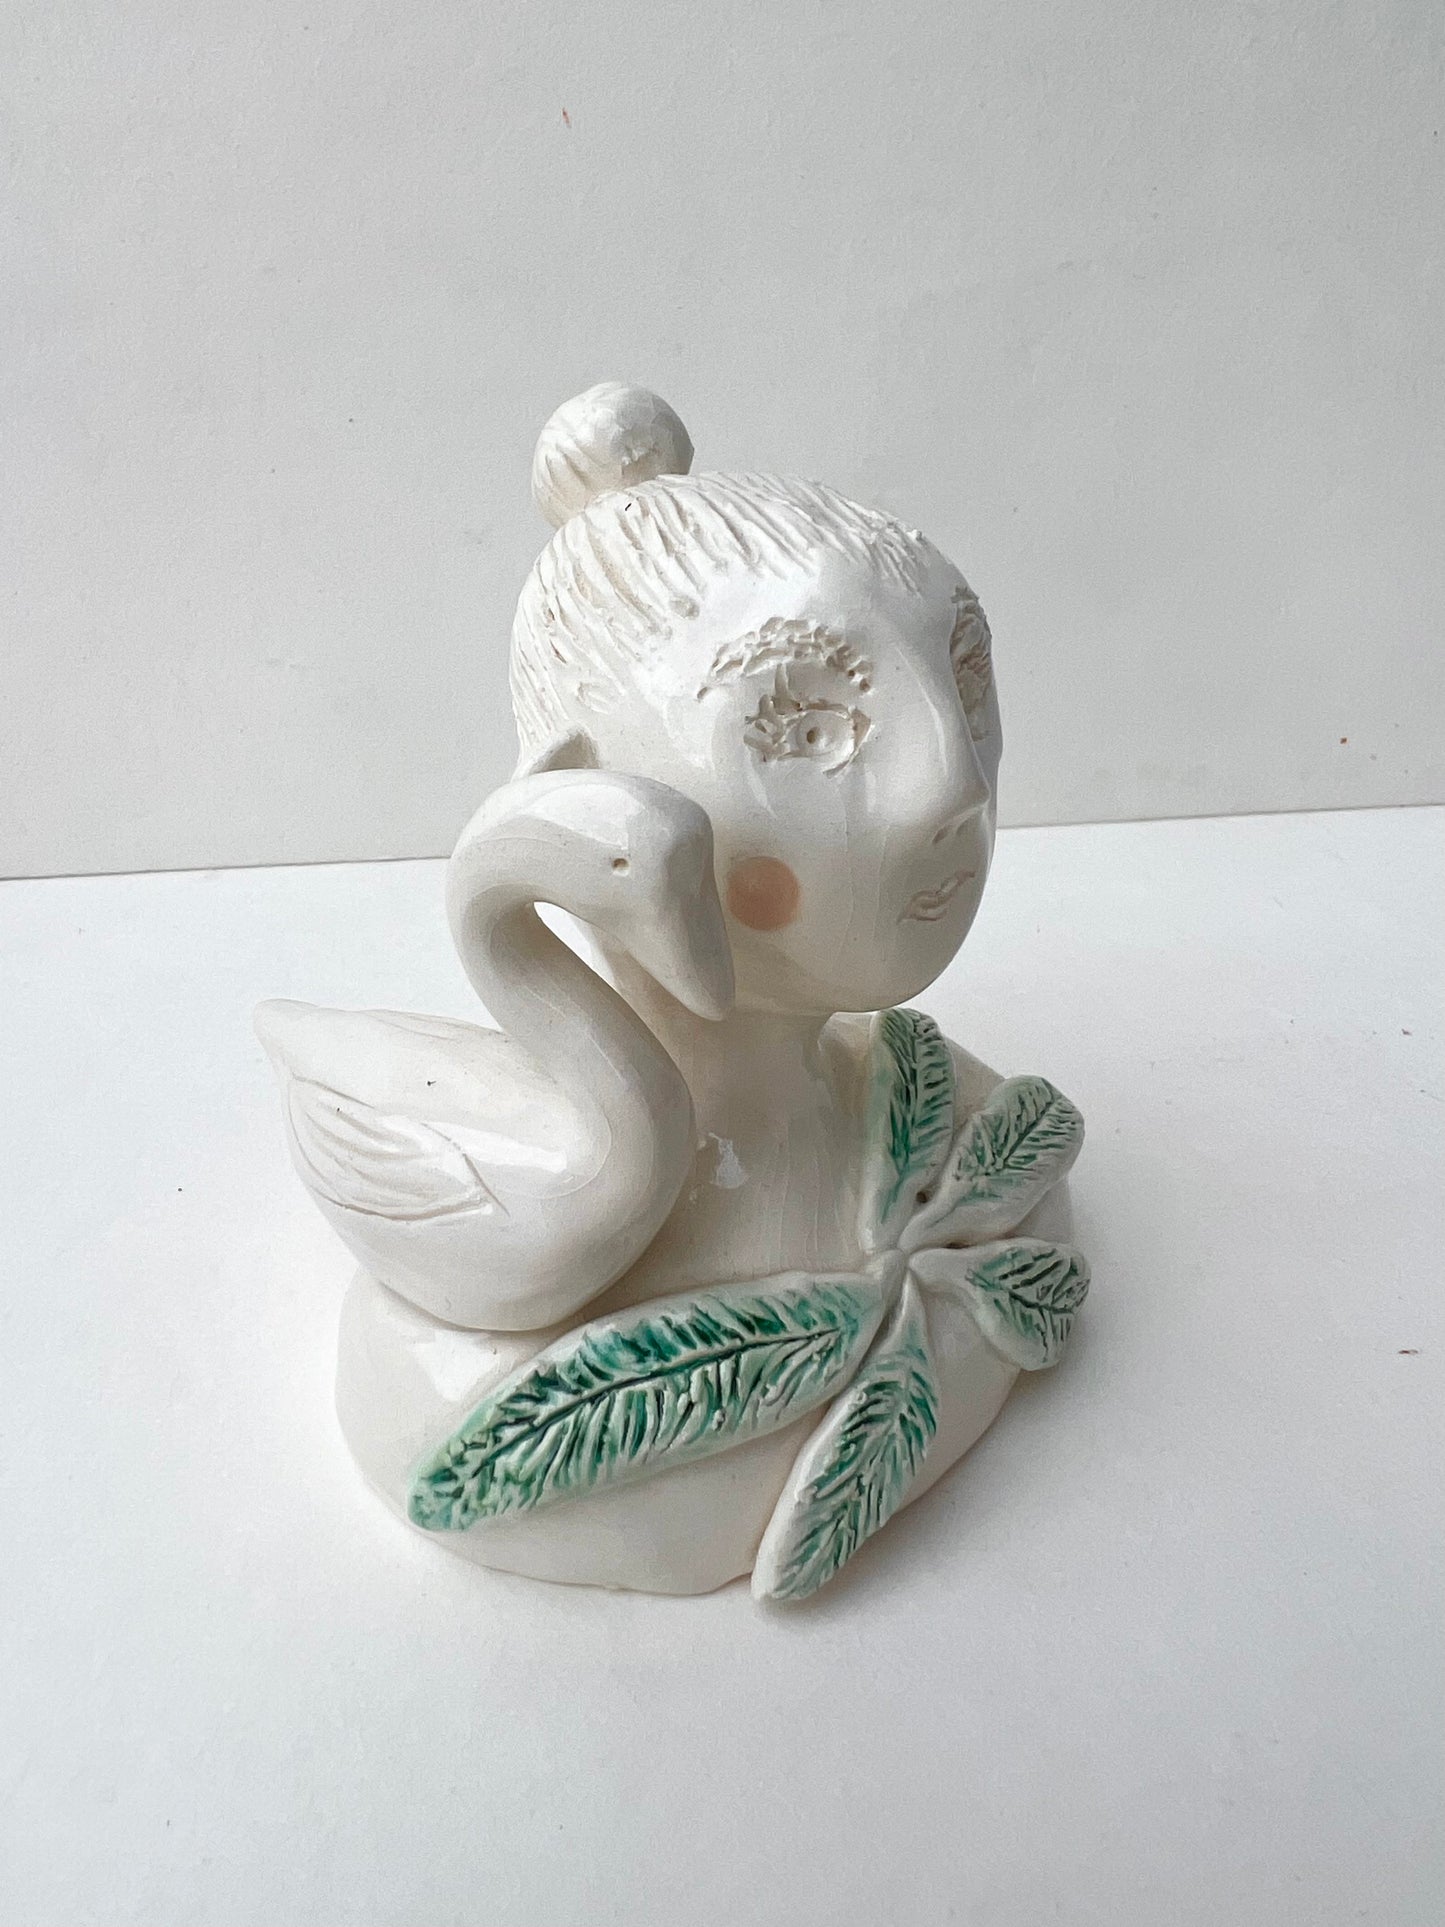 swan lake figure samples/seconds/sale sculpture